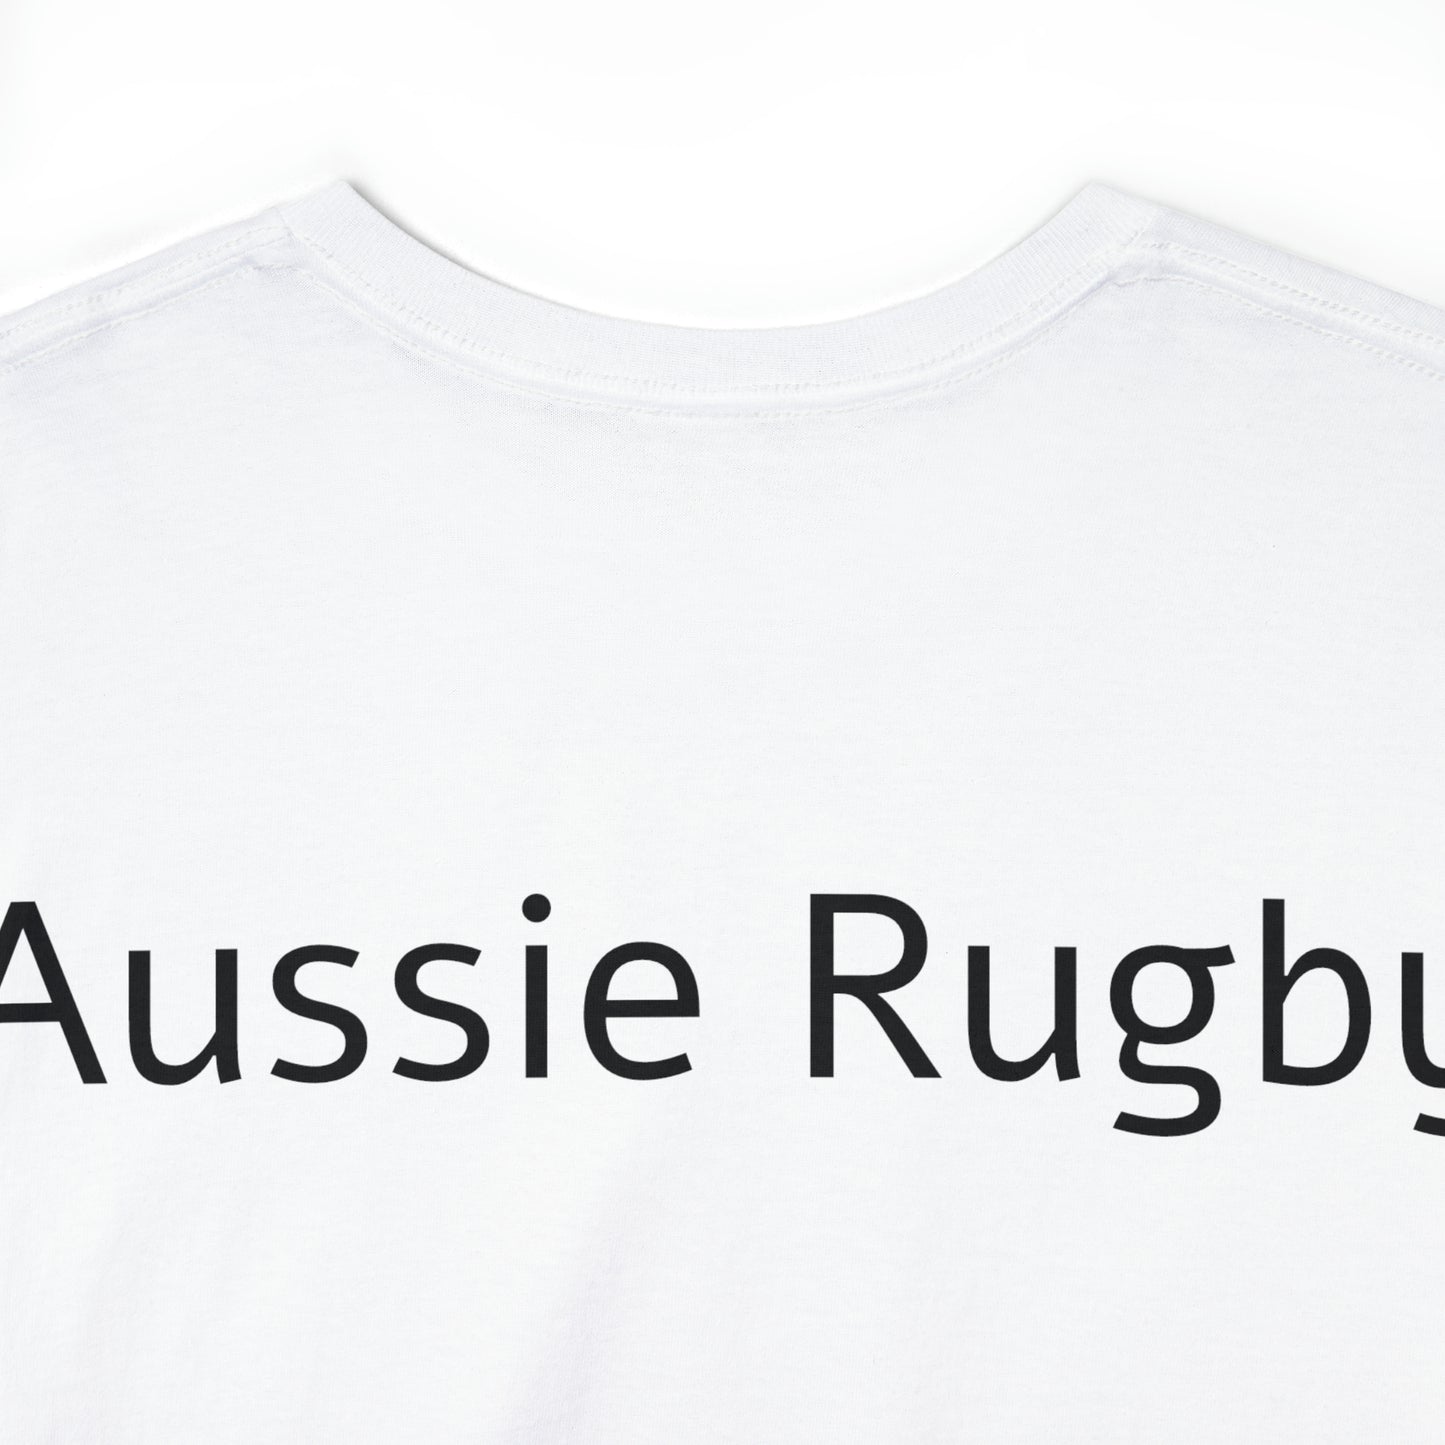 Happy Australia - light shirts